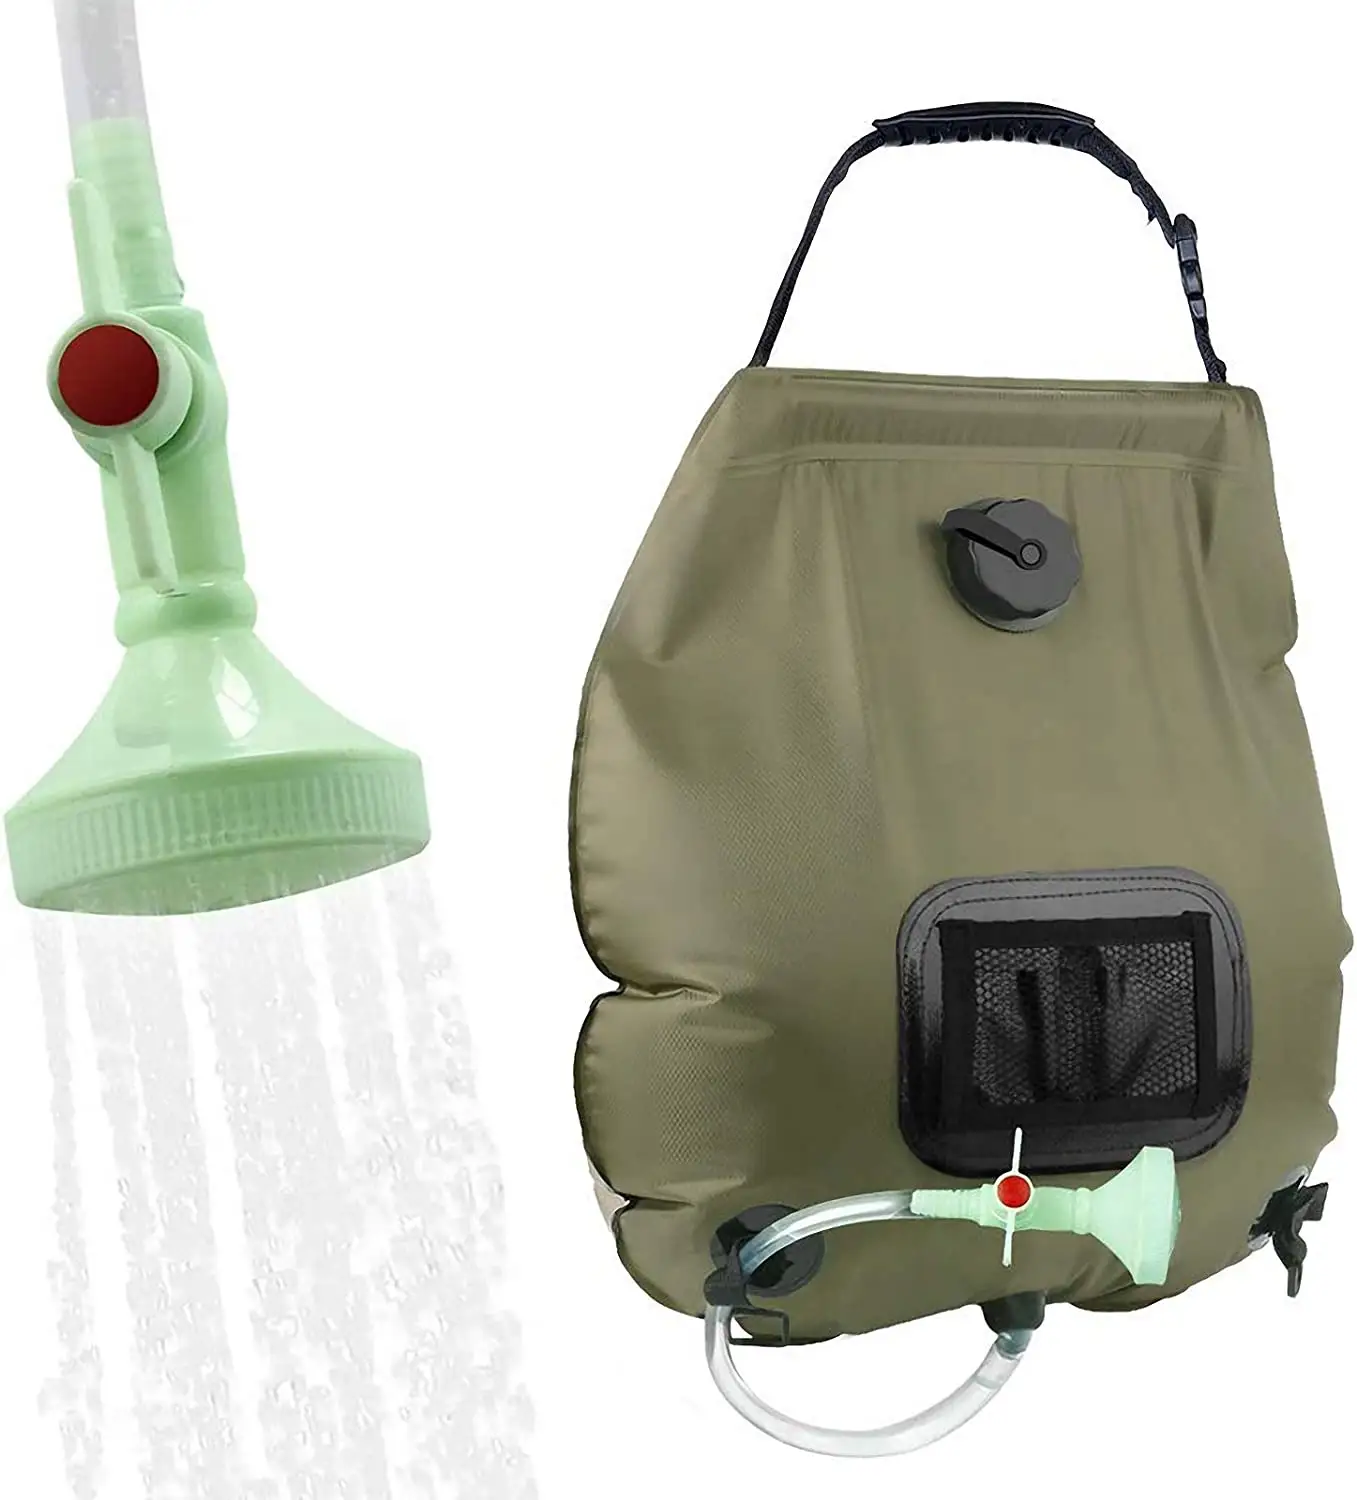 Bolsas DE AGUA DE 20L para acampar al aire libre, senderismo, bolsa de ducha Solar, calefacción, ducha para acampar, escalada, bolsa de hidratación, manguera, cabezal de ducha conmutable